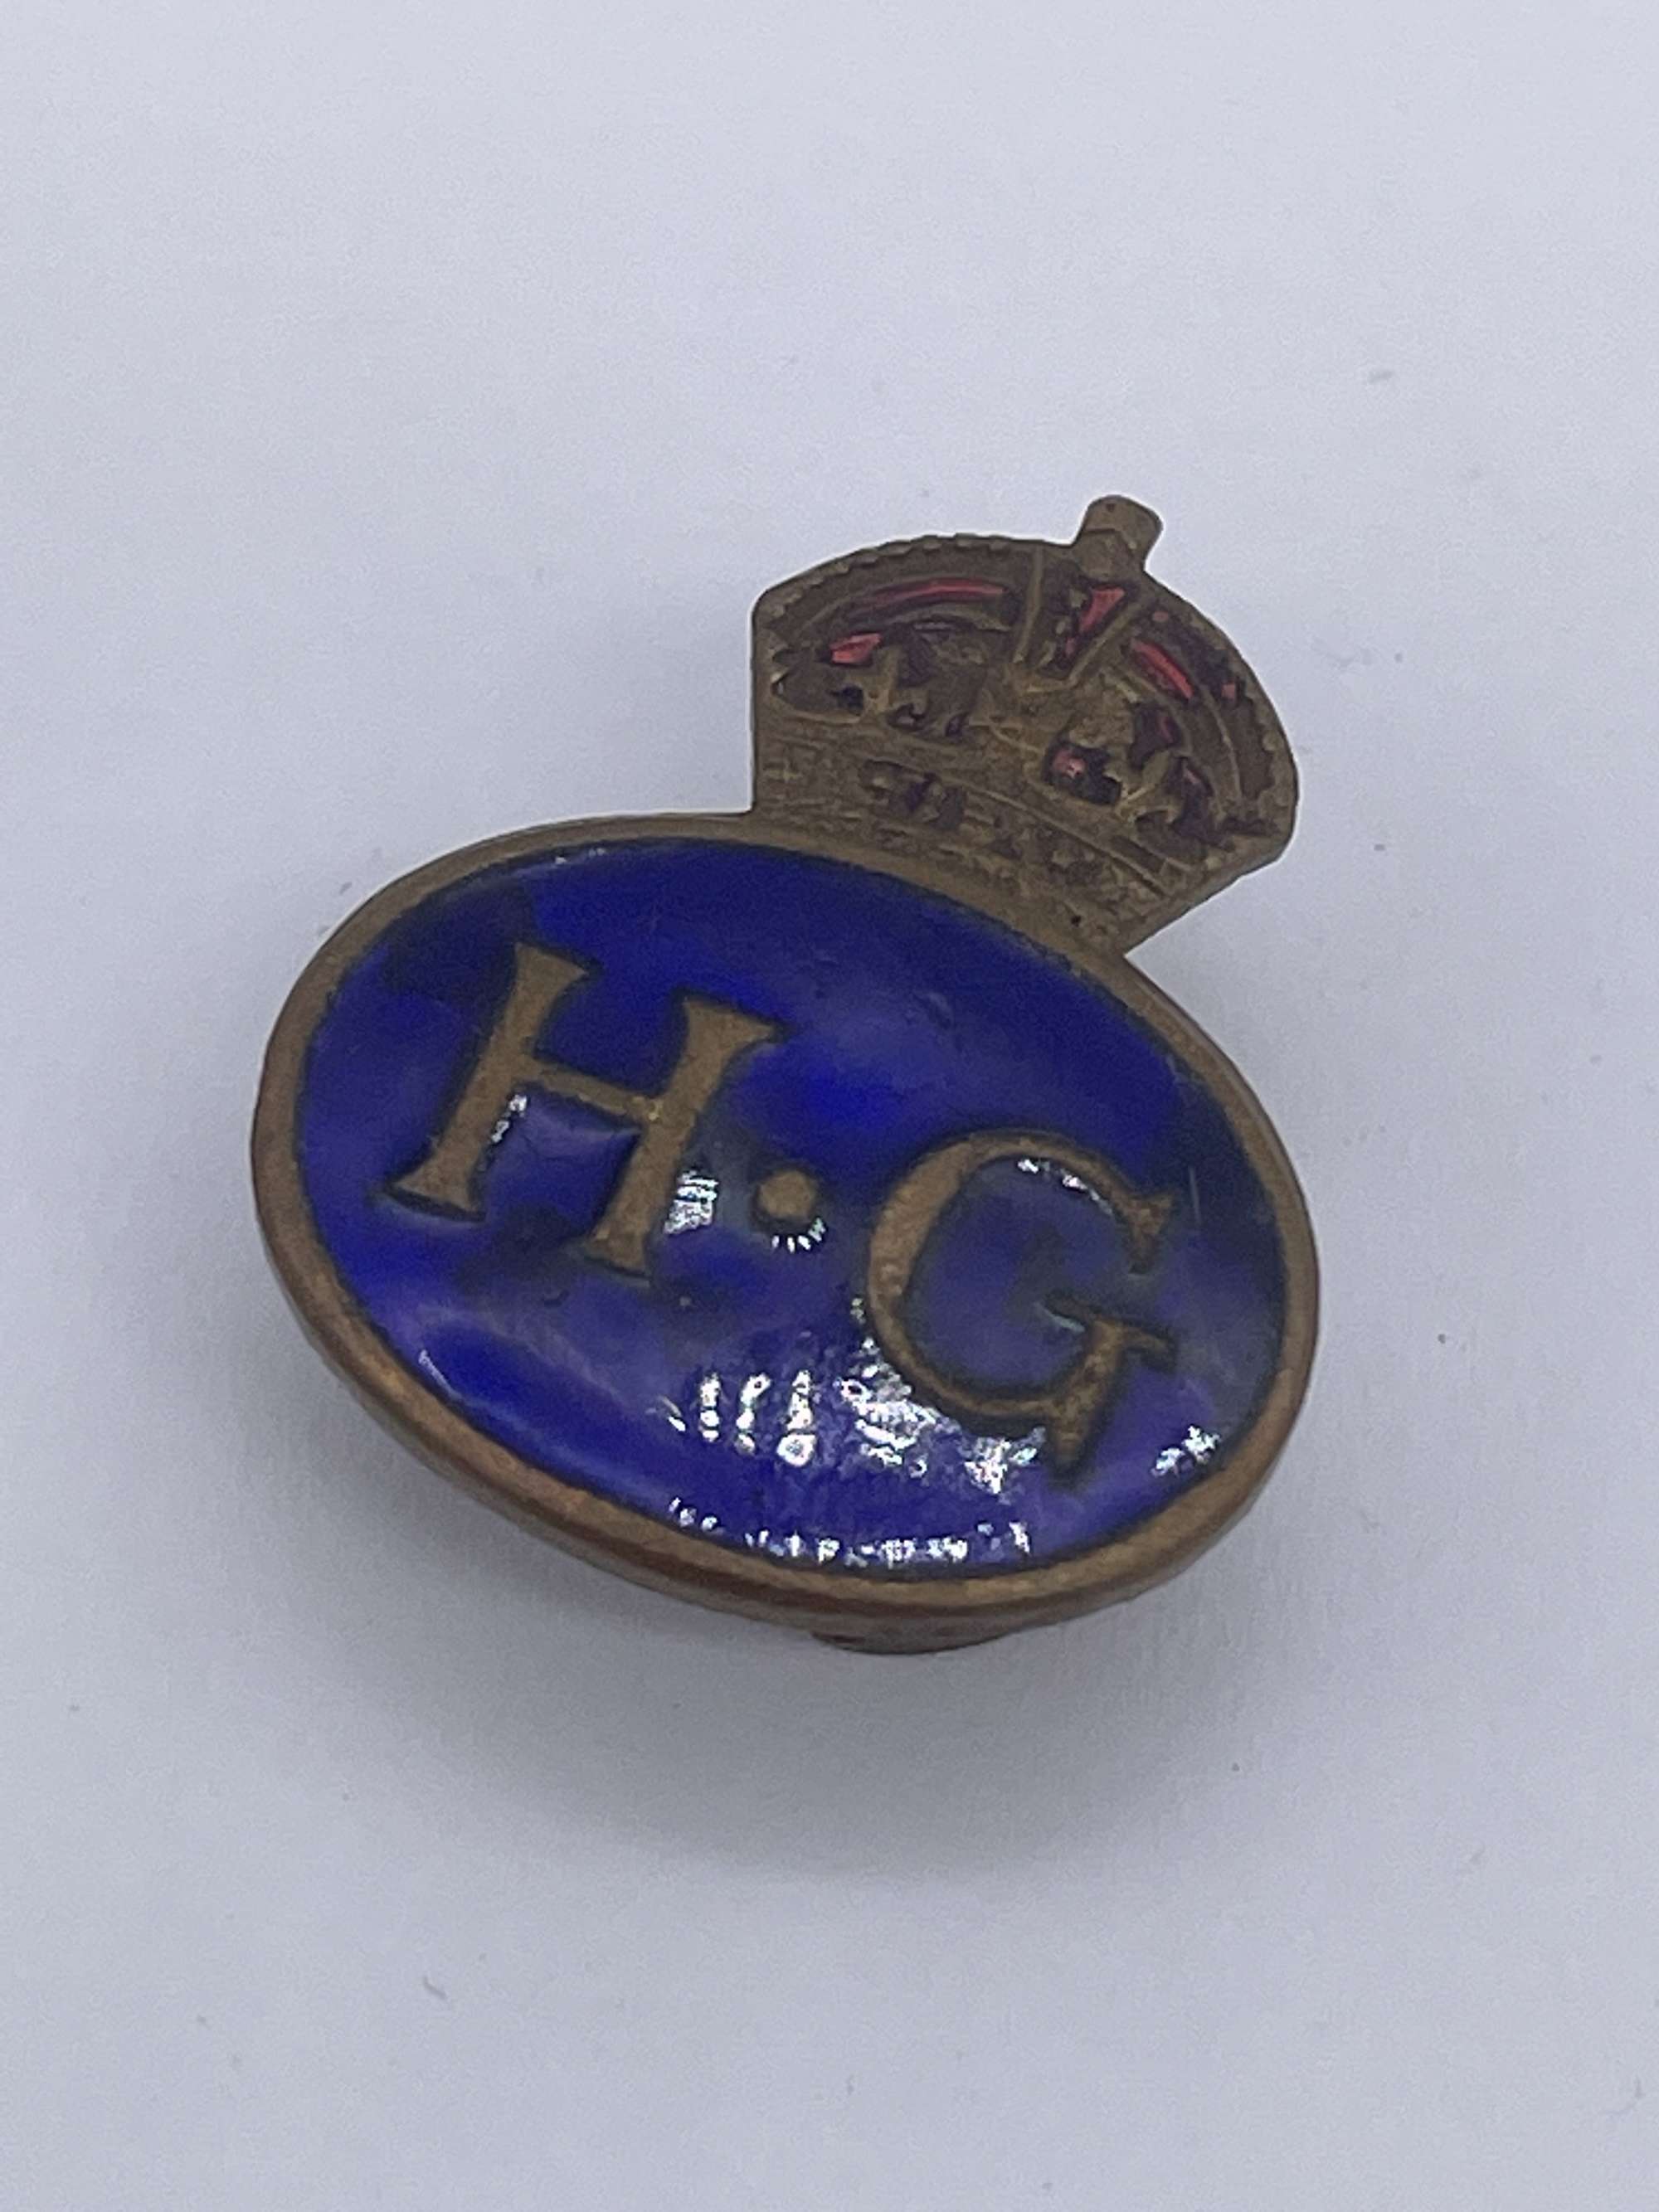 Original World War Two Era Buttonhole Badge, 